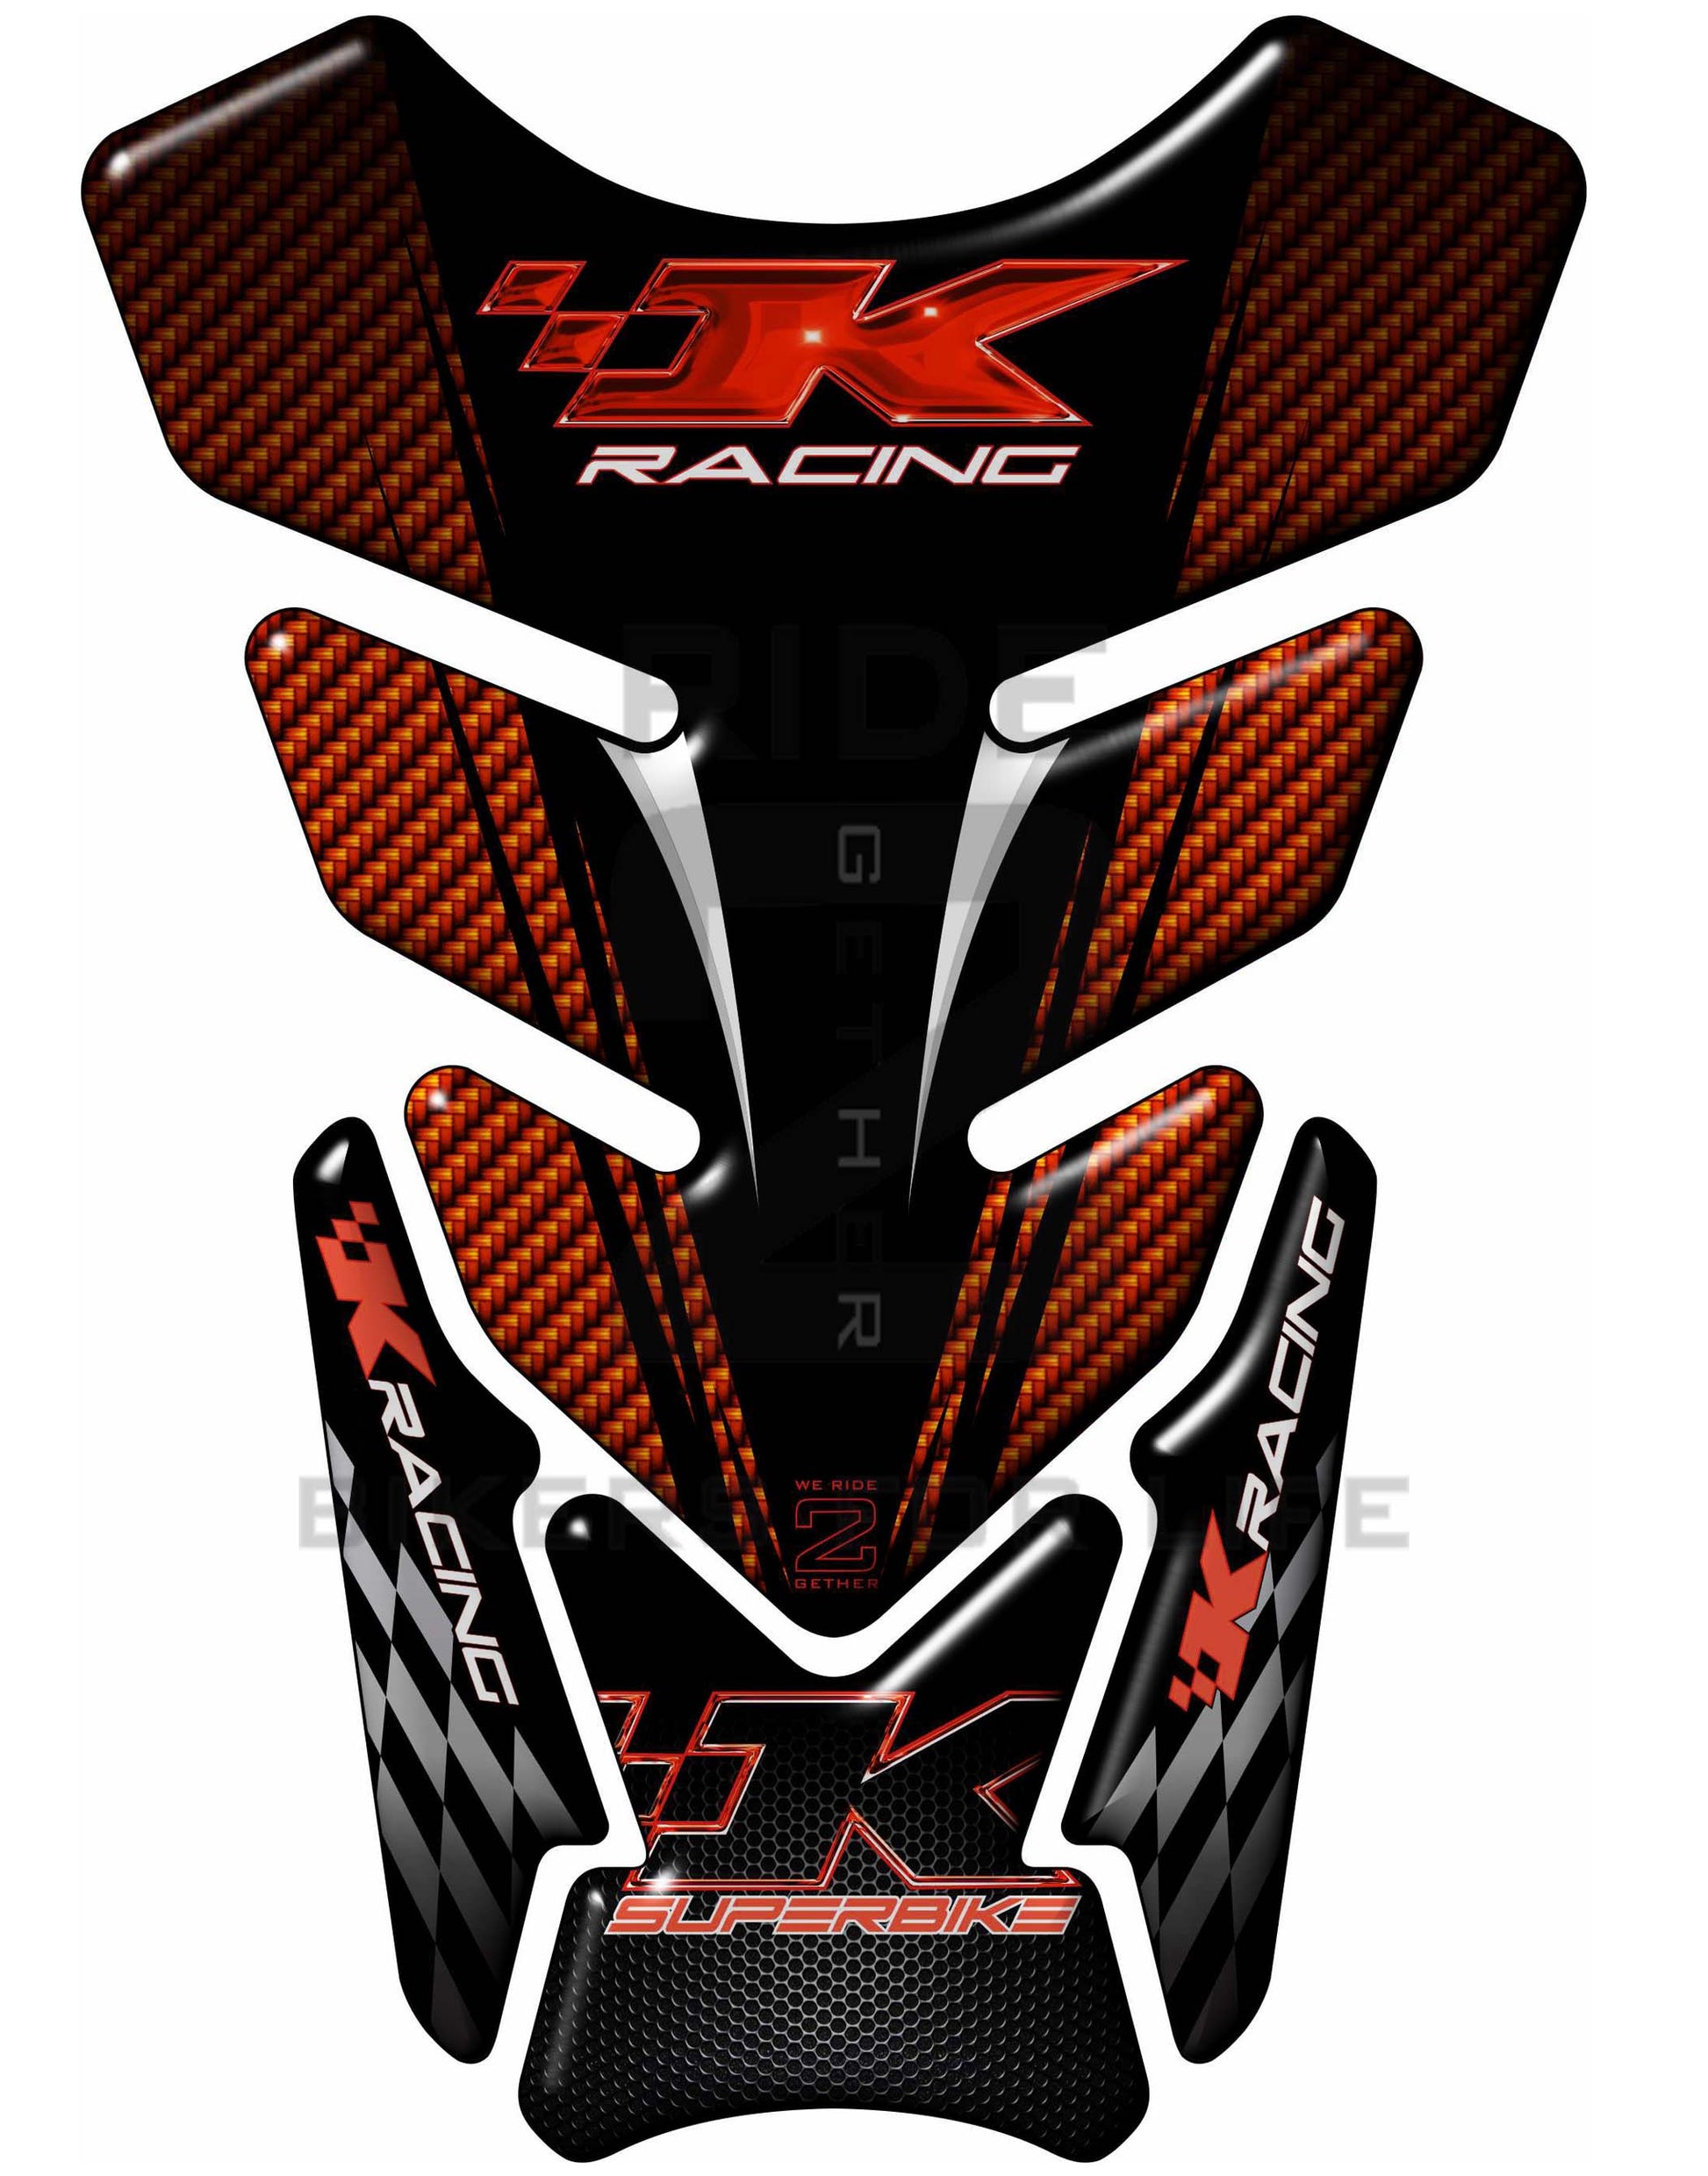 Kawasaki K Racing Red and Black Carbon Fibre SuperBike Tank Pad / Protector